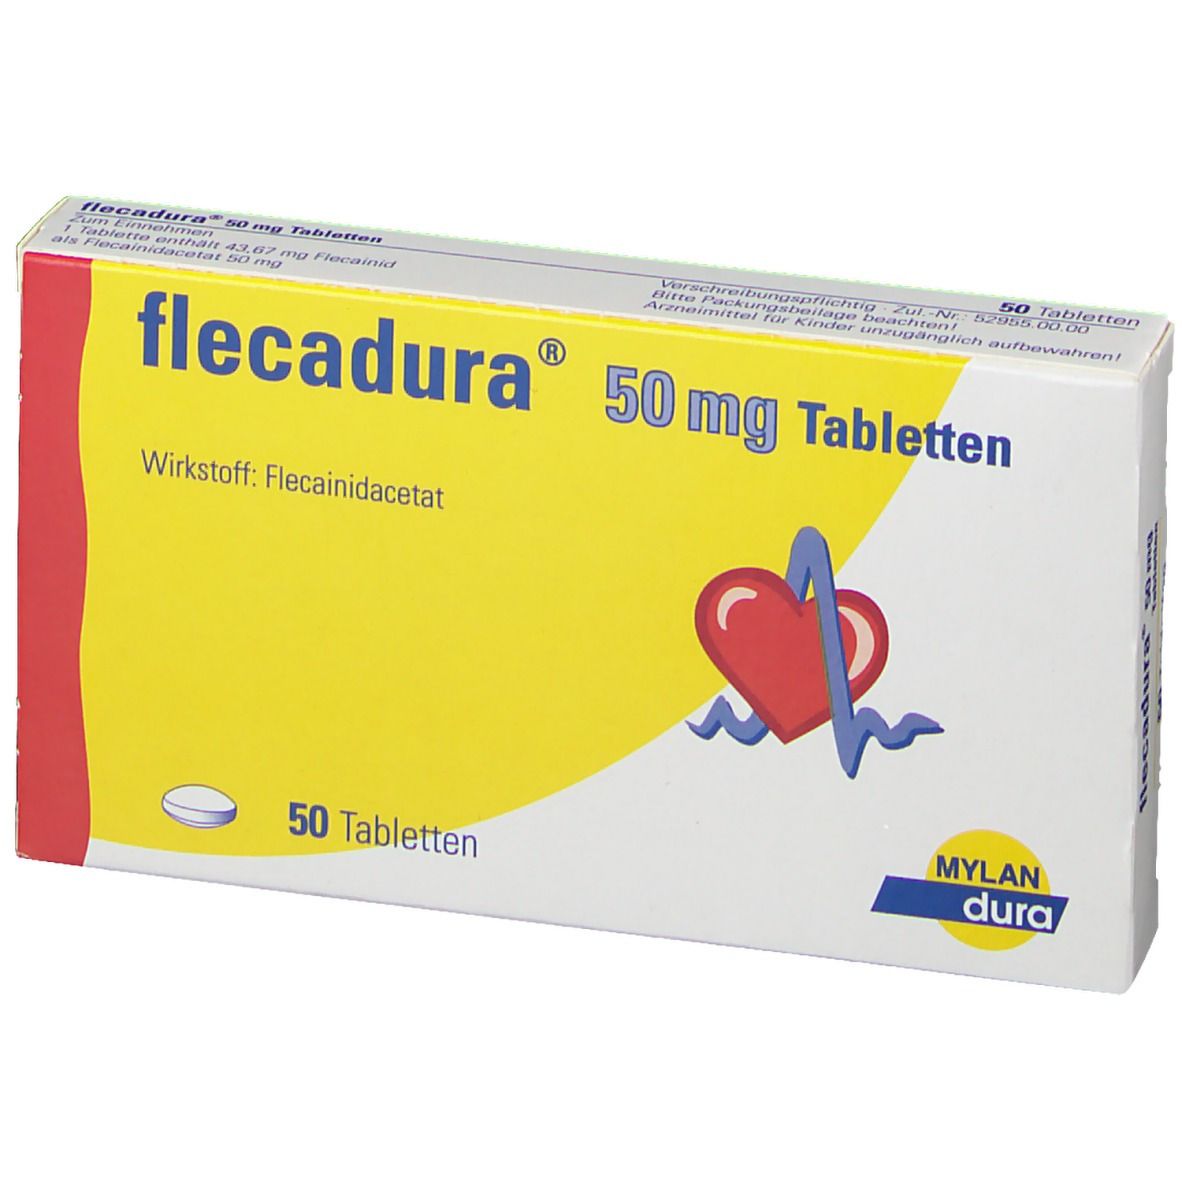 flecadura 50 mg